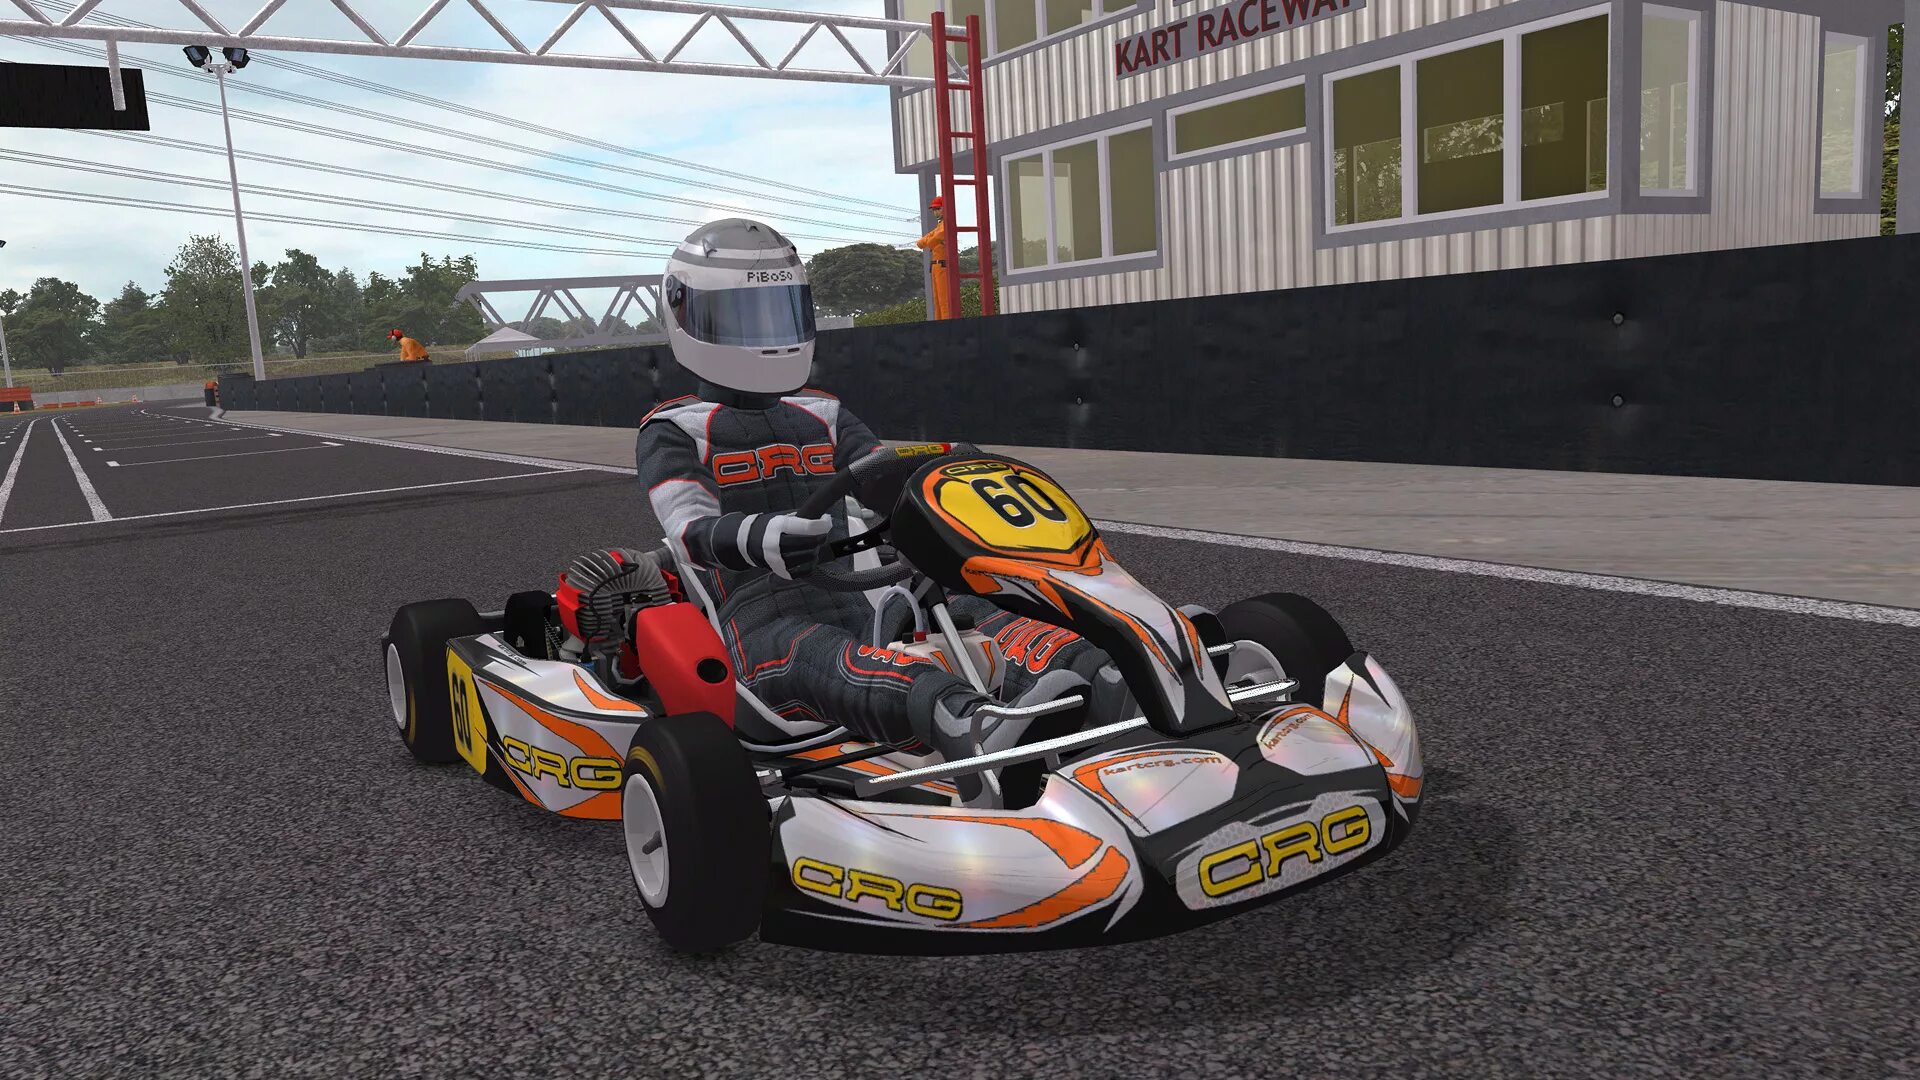 Kart Racing Pro. Картинг GP Racing 2008 года. Симулятор картинга. Игры про картинг на ПК.